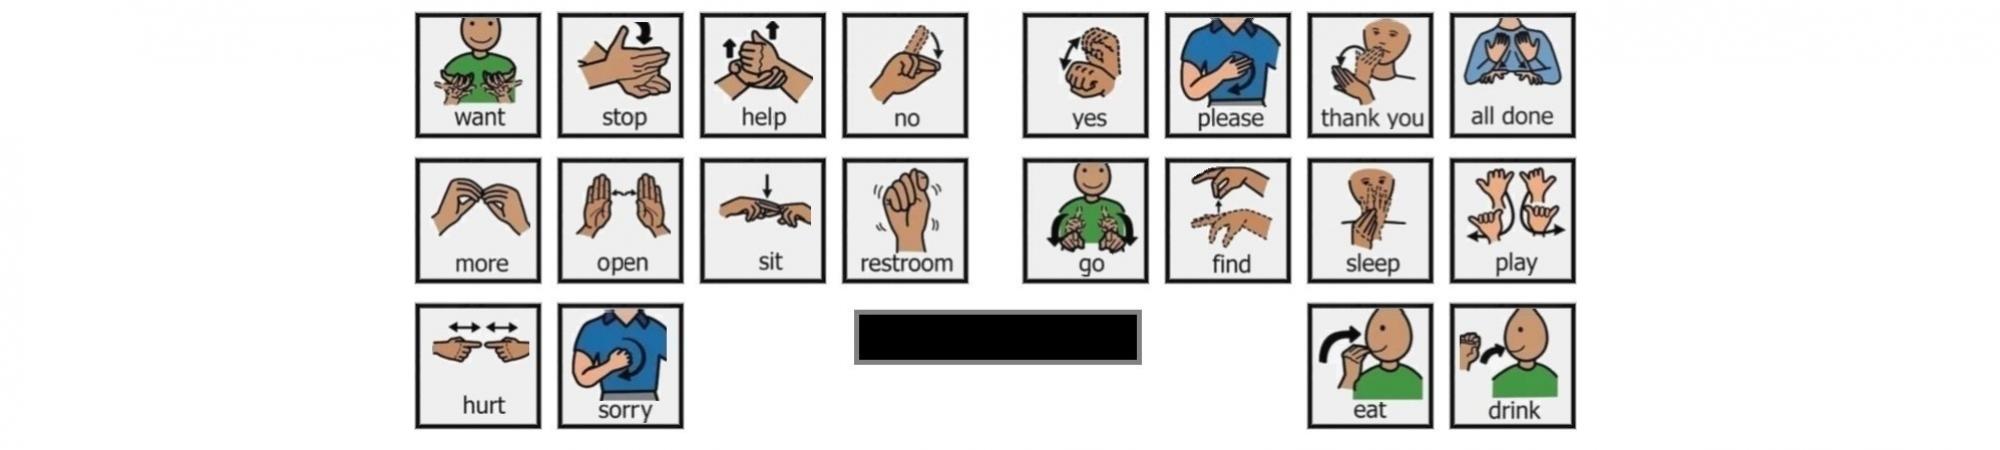 Asl symbols American sign language